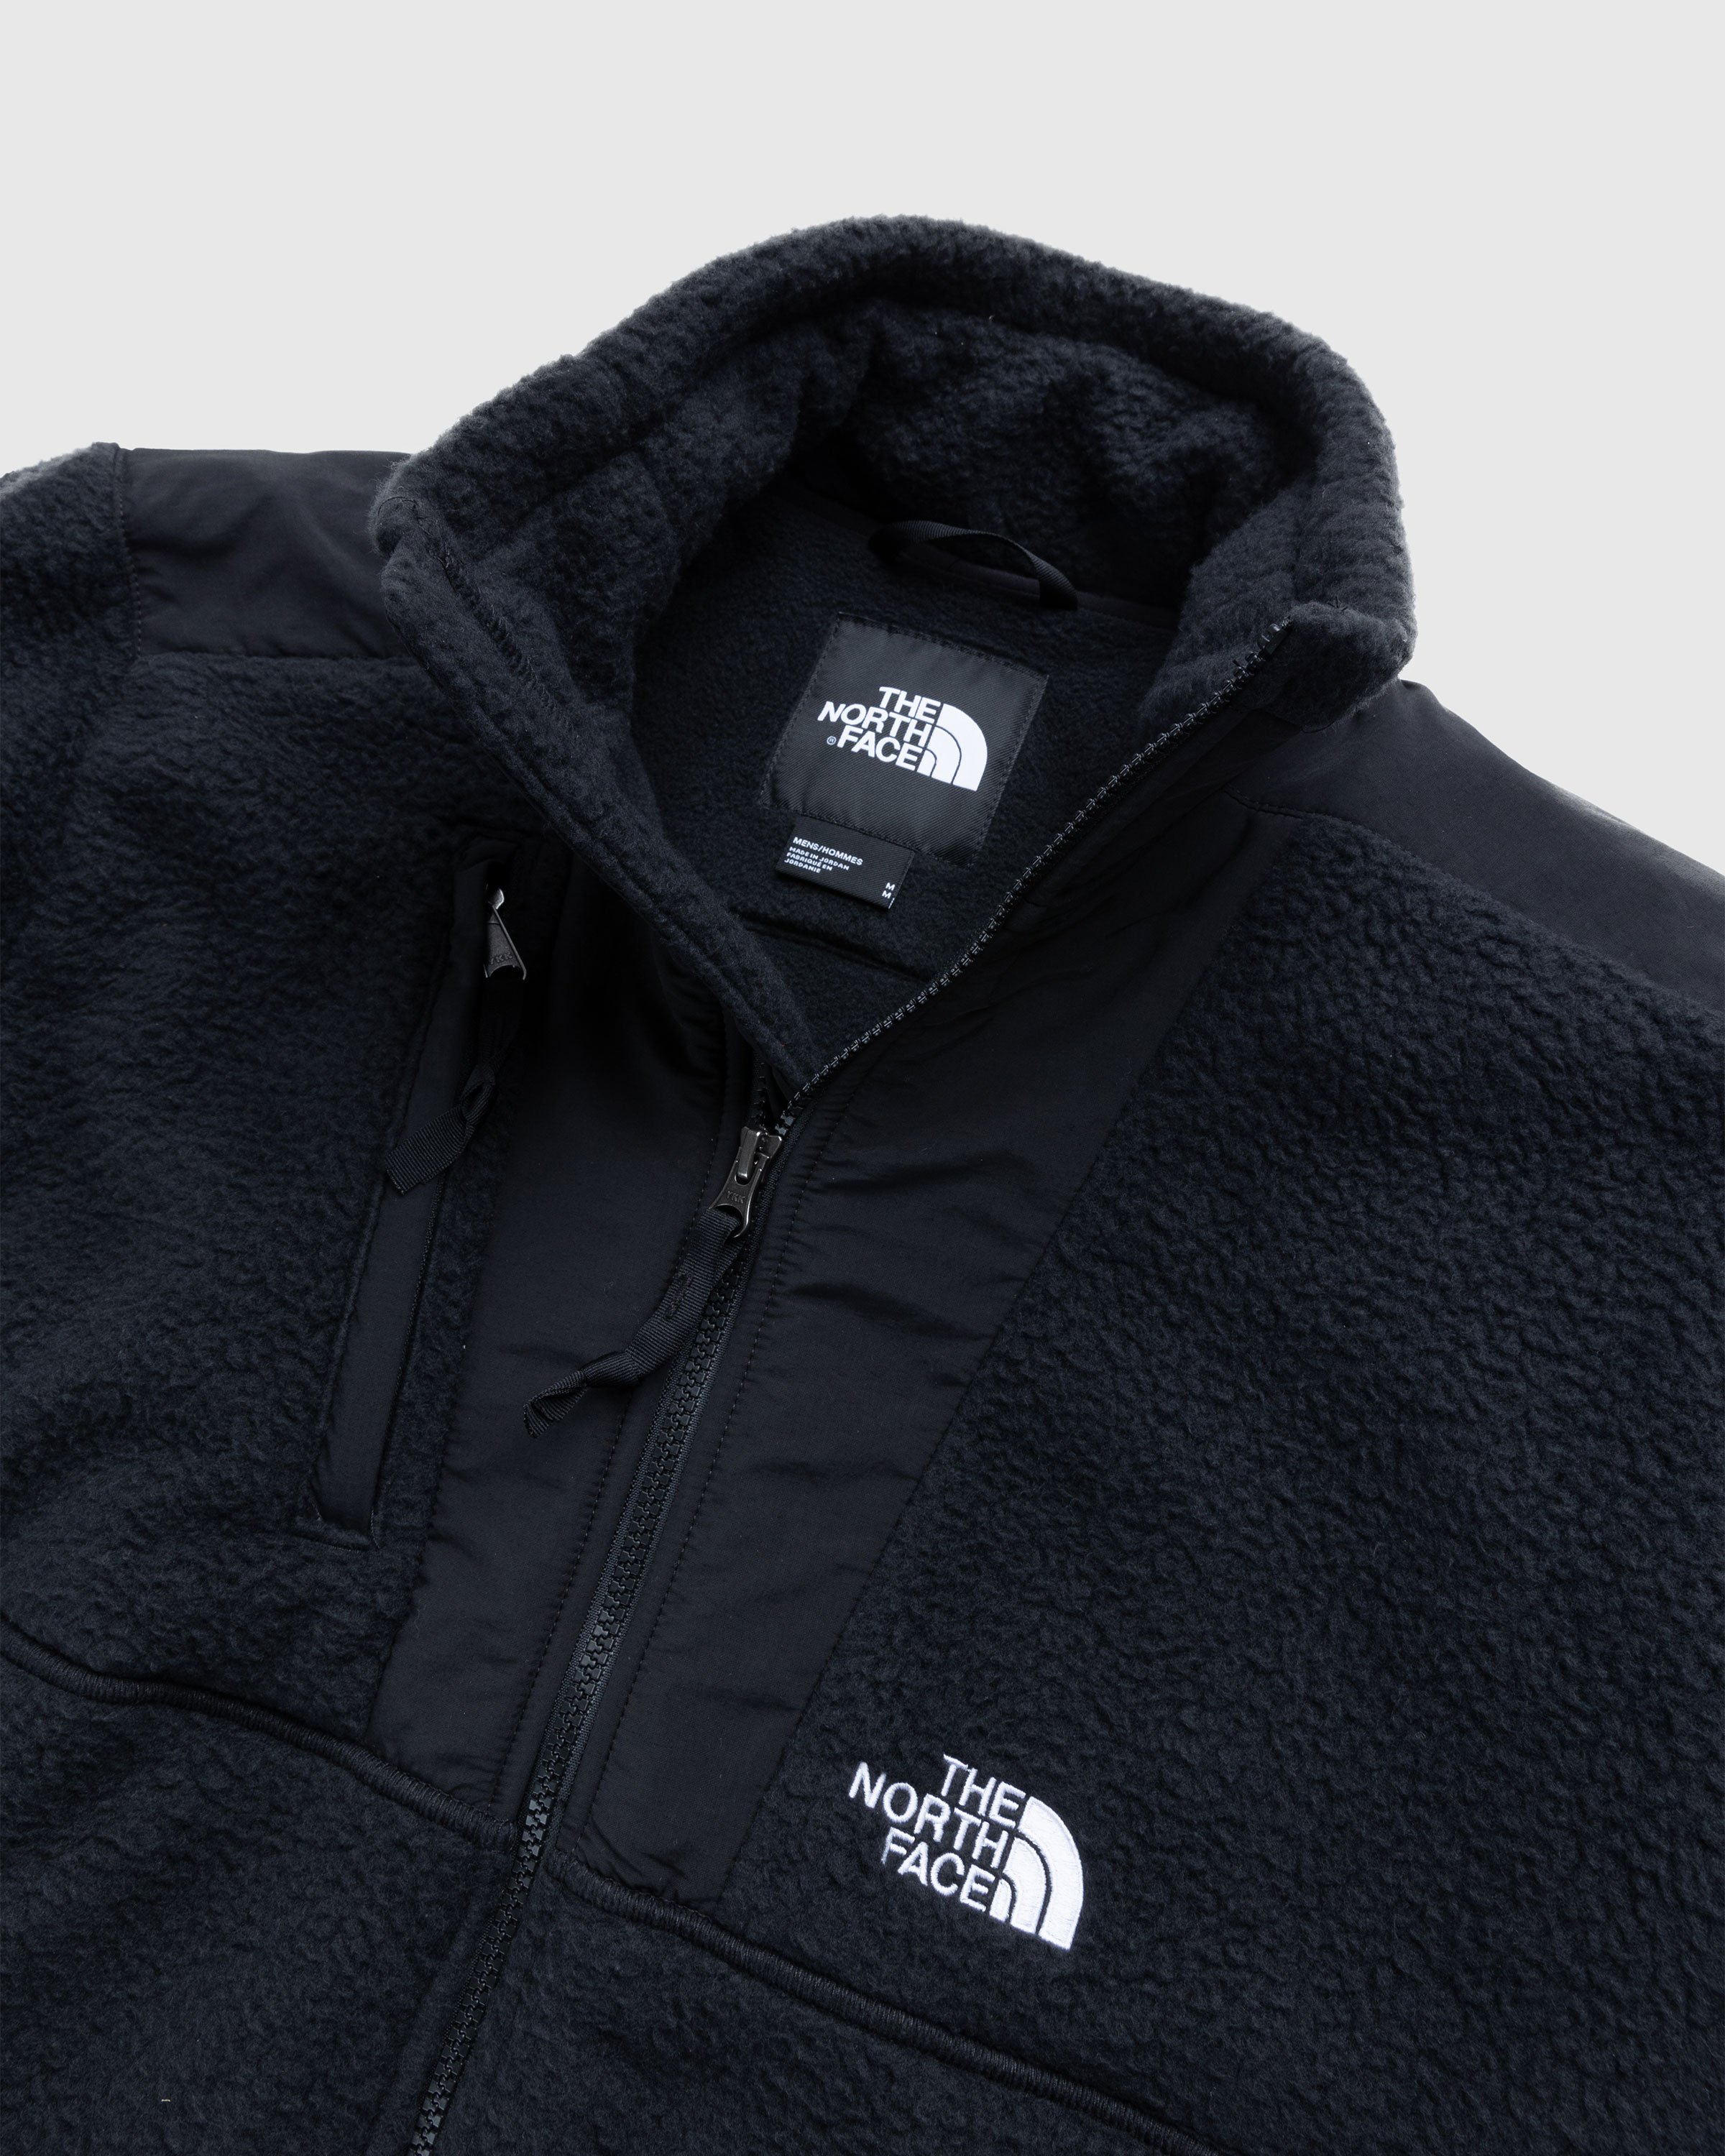 The North Face - '94 High Pile Denali Jacket Black - Clothing - Black - Image 3